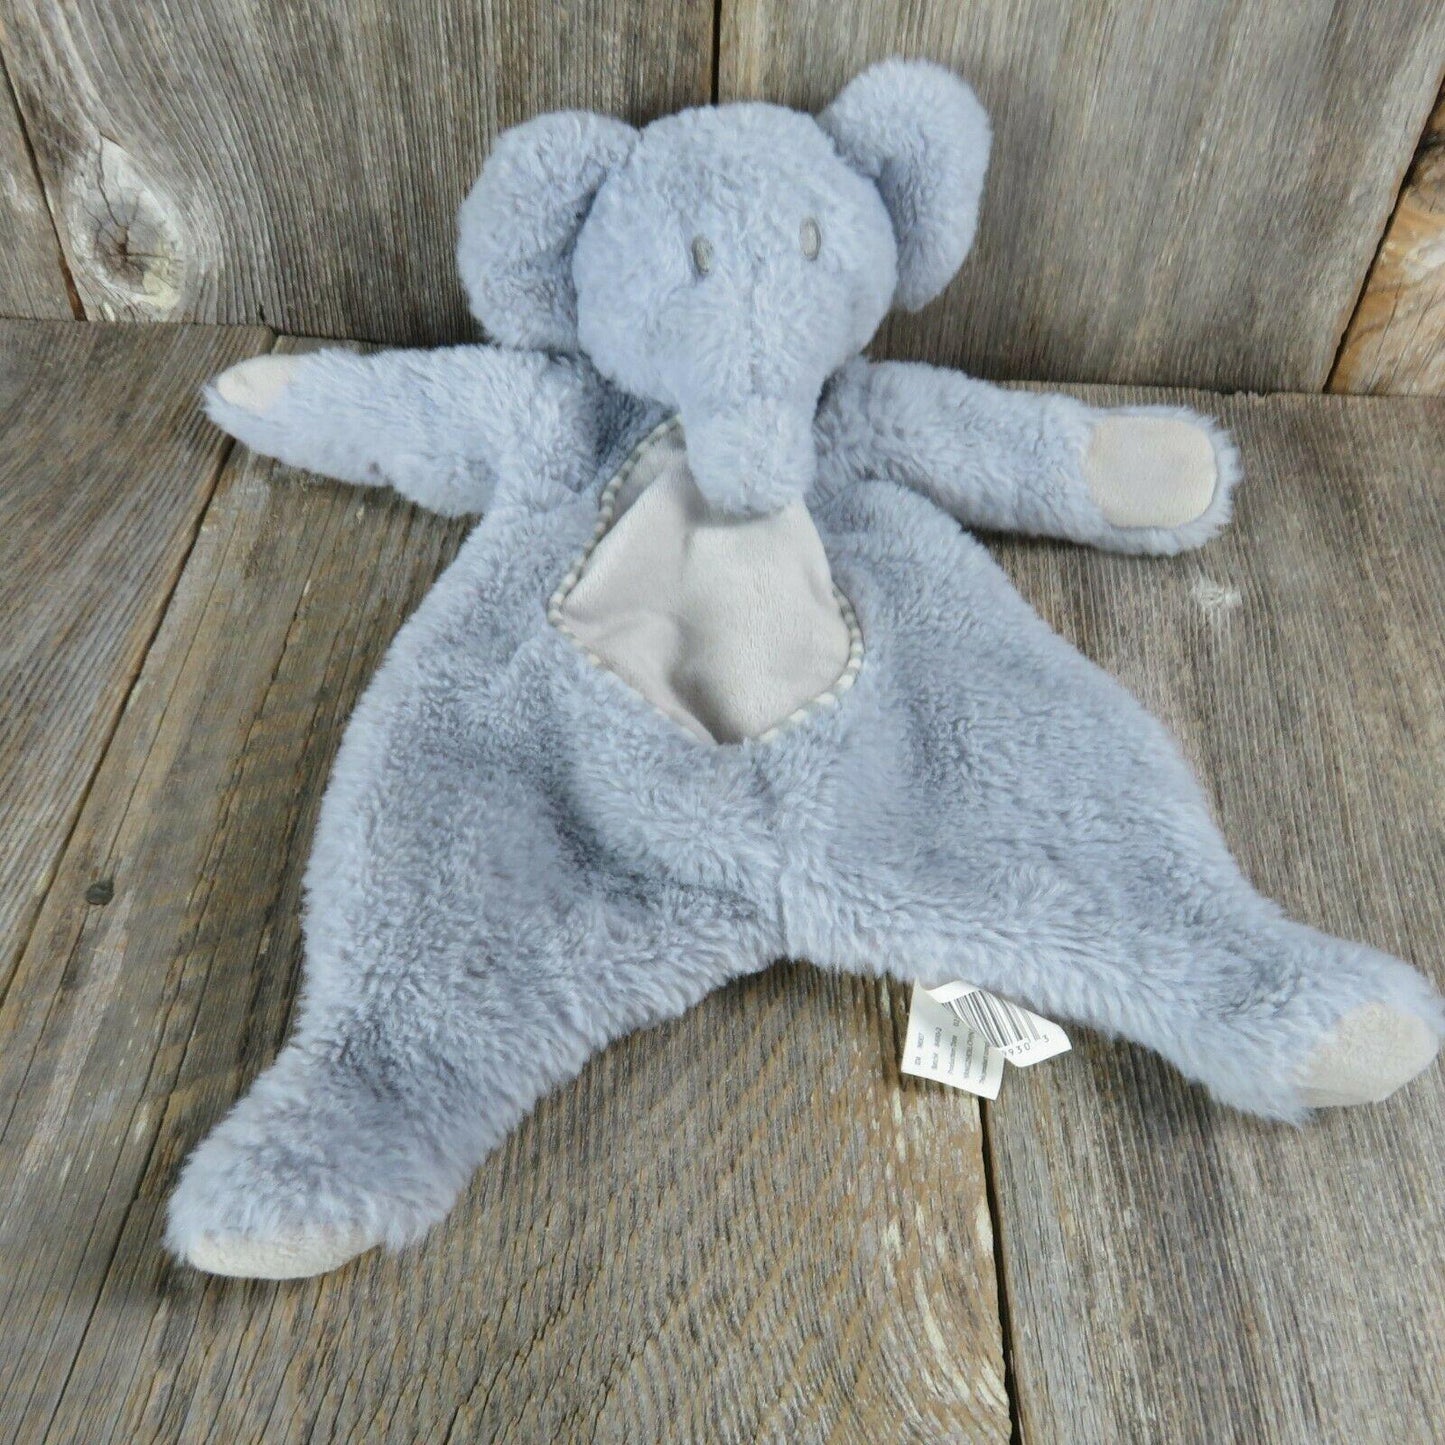 Gray Elephant Plush Rattle Lovie Blanket Stuffed Animal Lovey Security Kellytoy Stuffed Animal